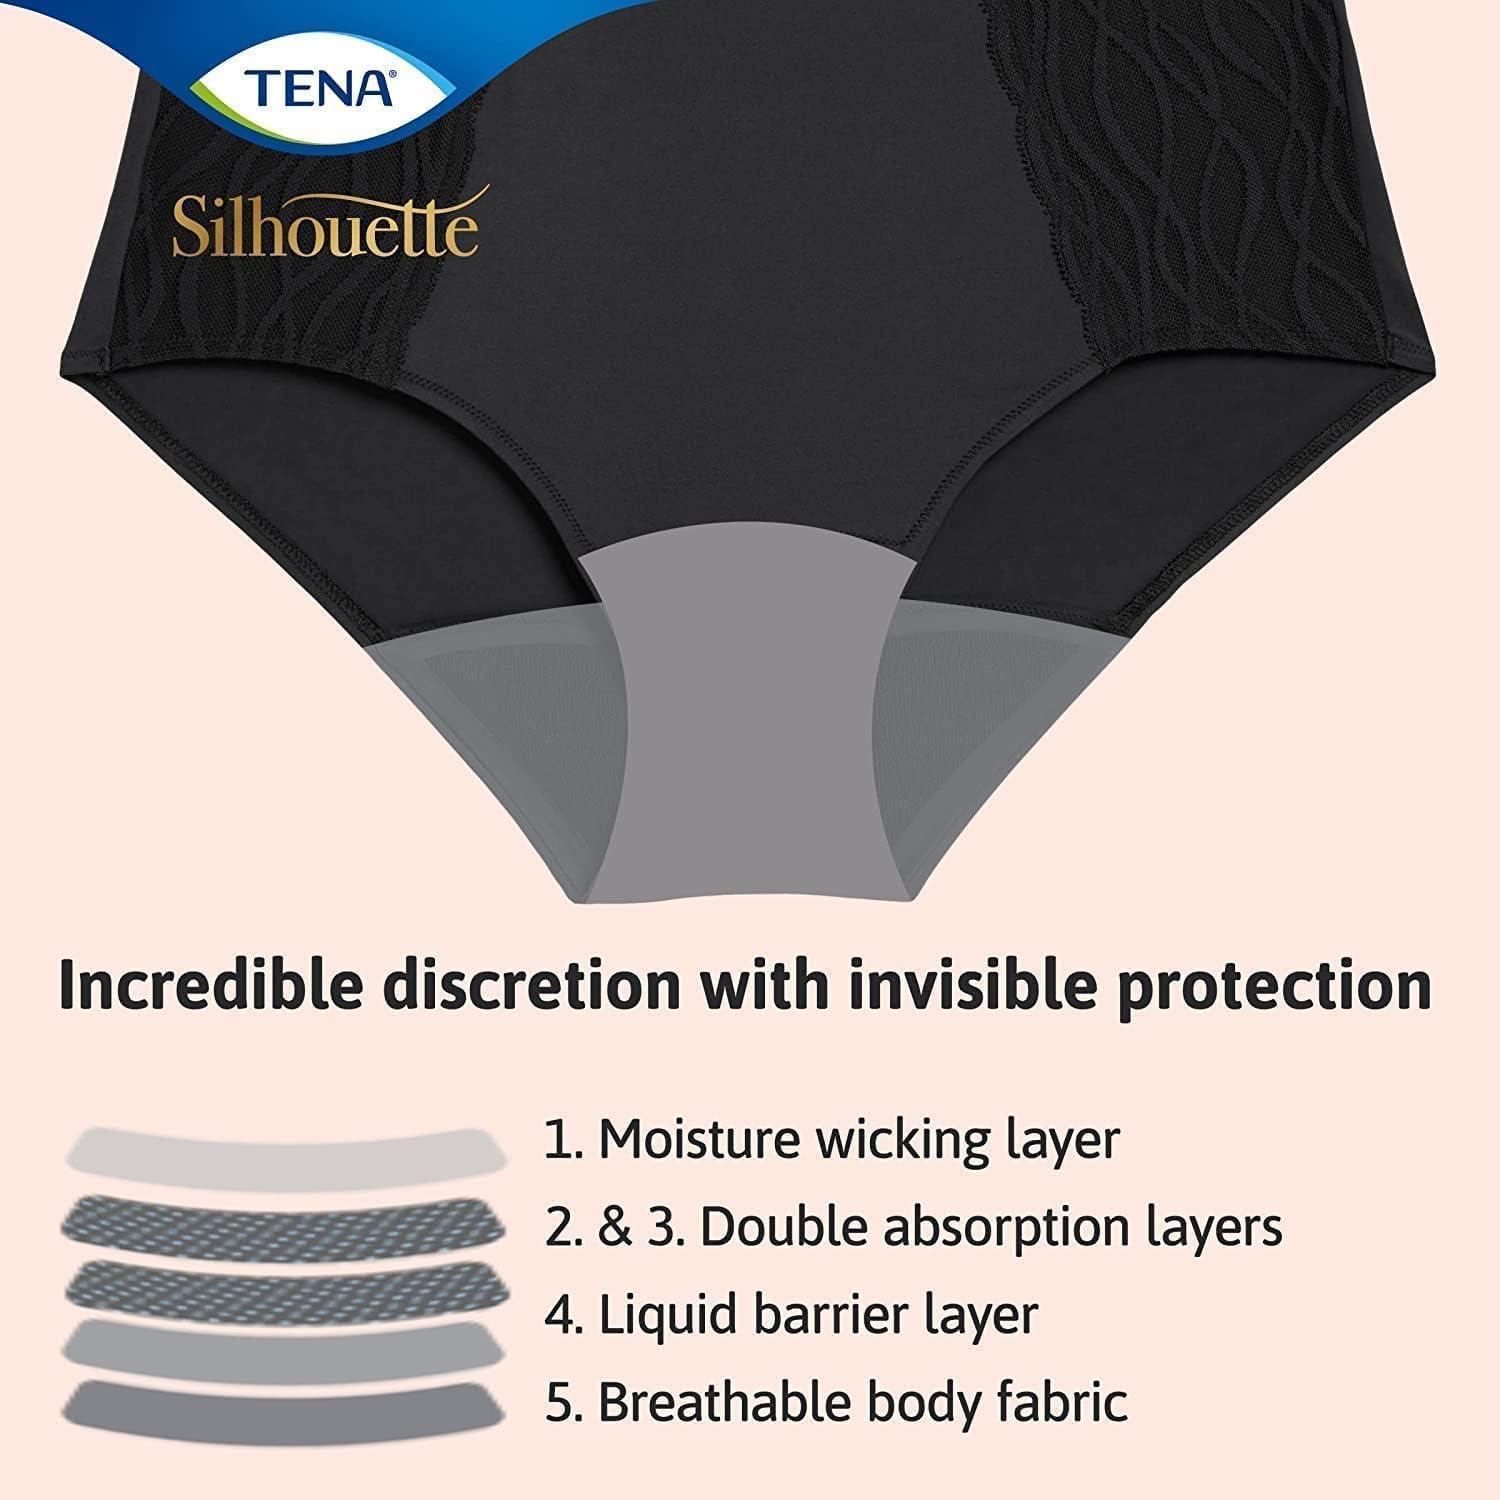 TENA Stylish Washable Absorbent Incontinence Underwear